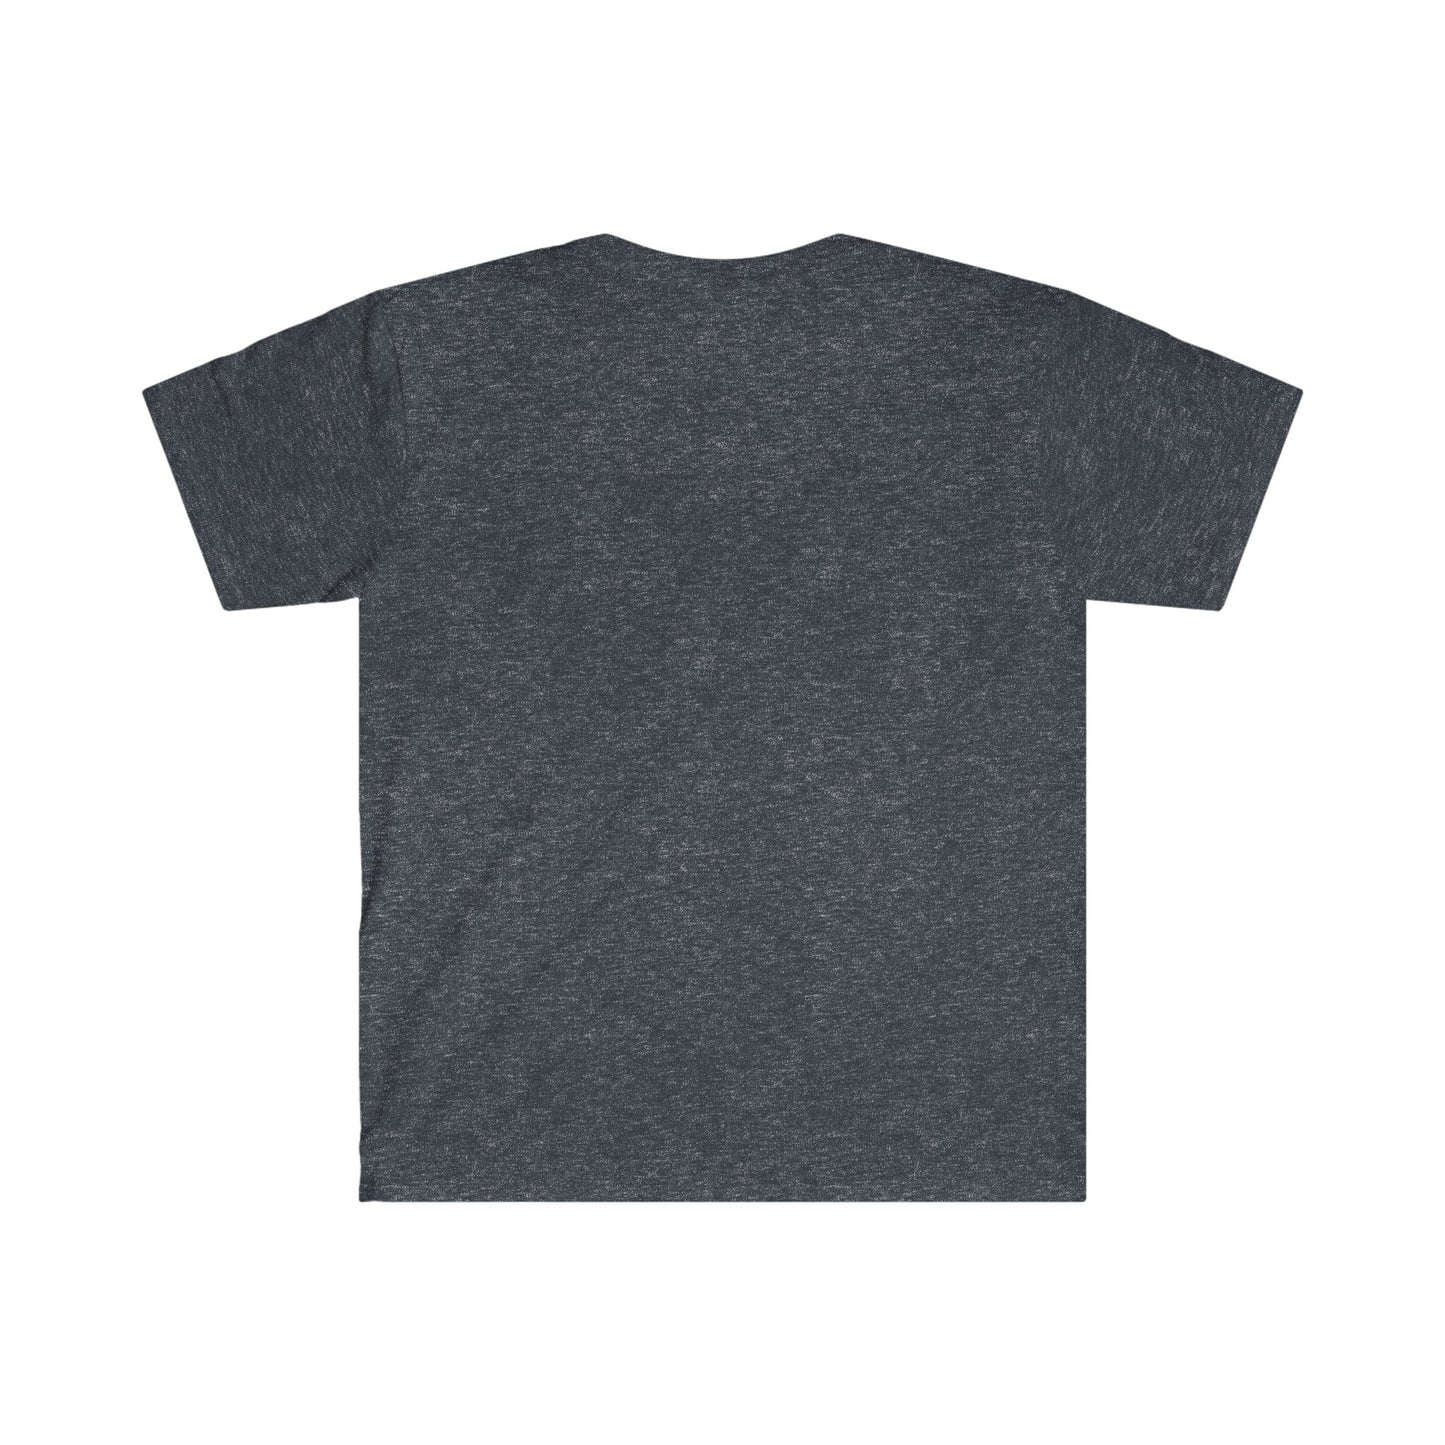 T-Shirt OZEMPIG Weight Loss Fad T-Shirt LEATHERDADDY BATOR